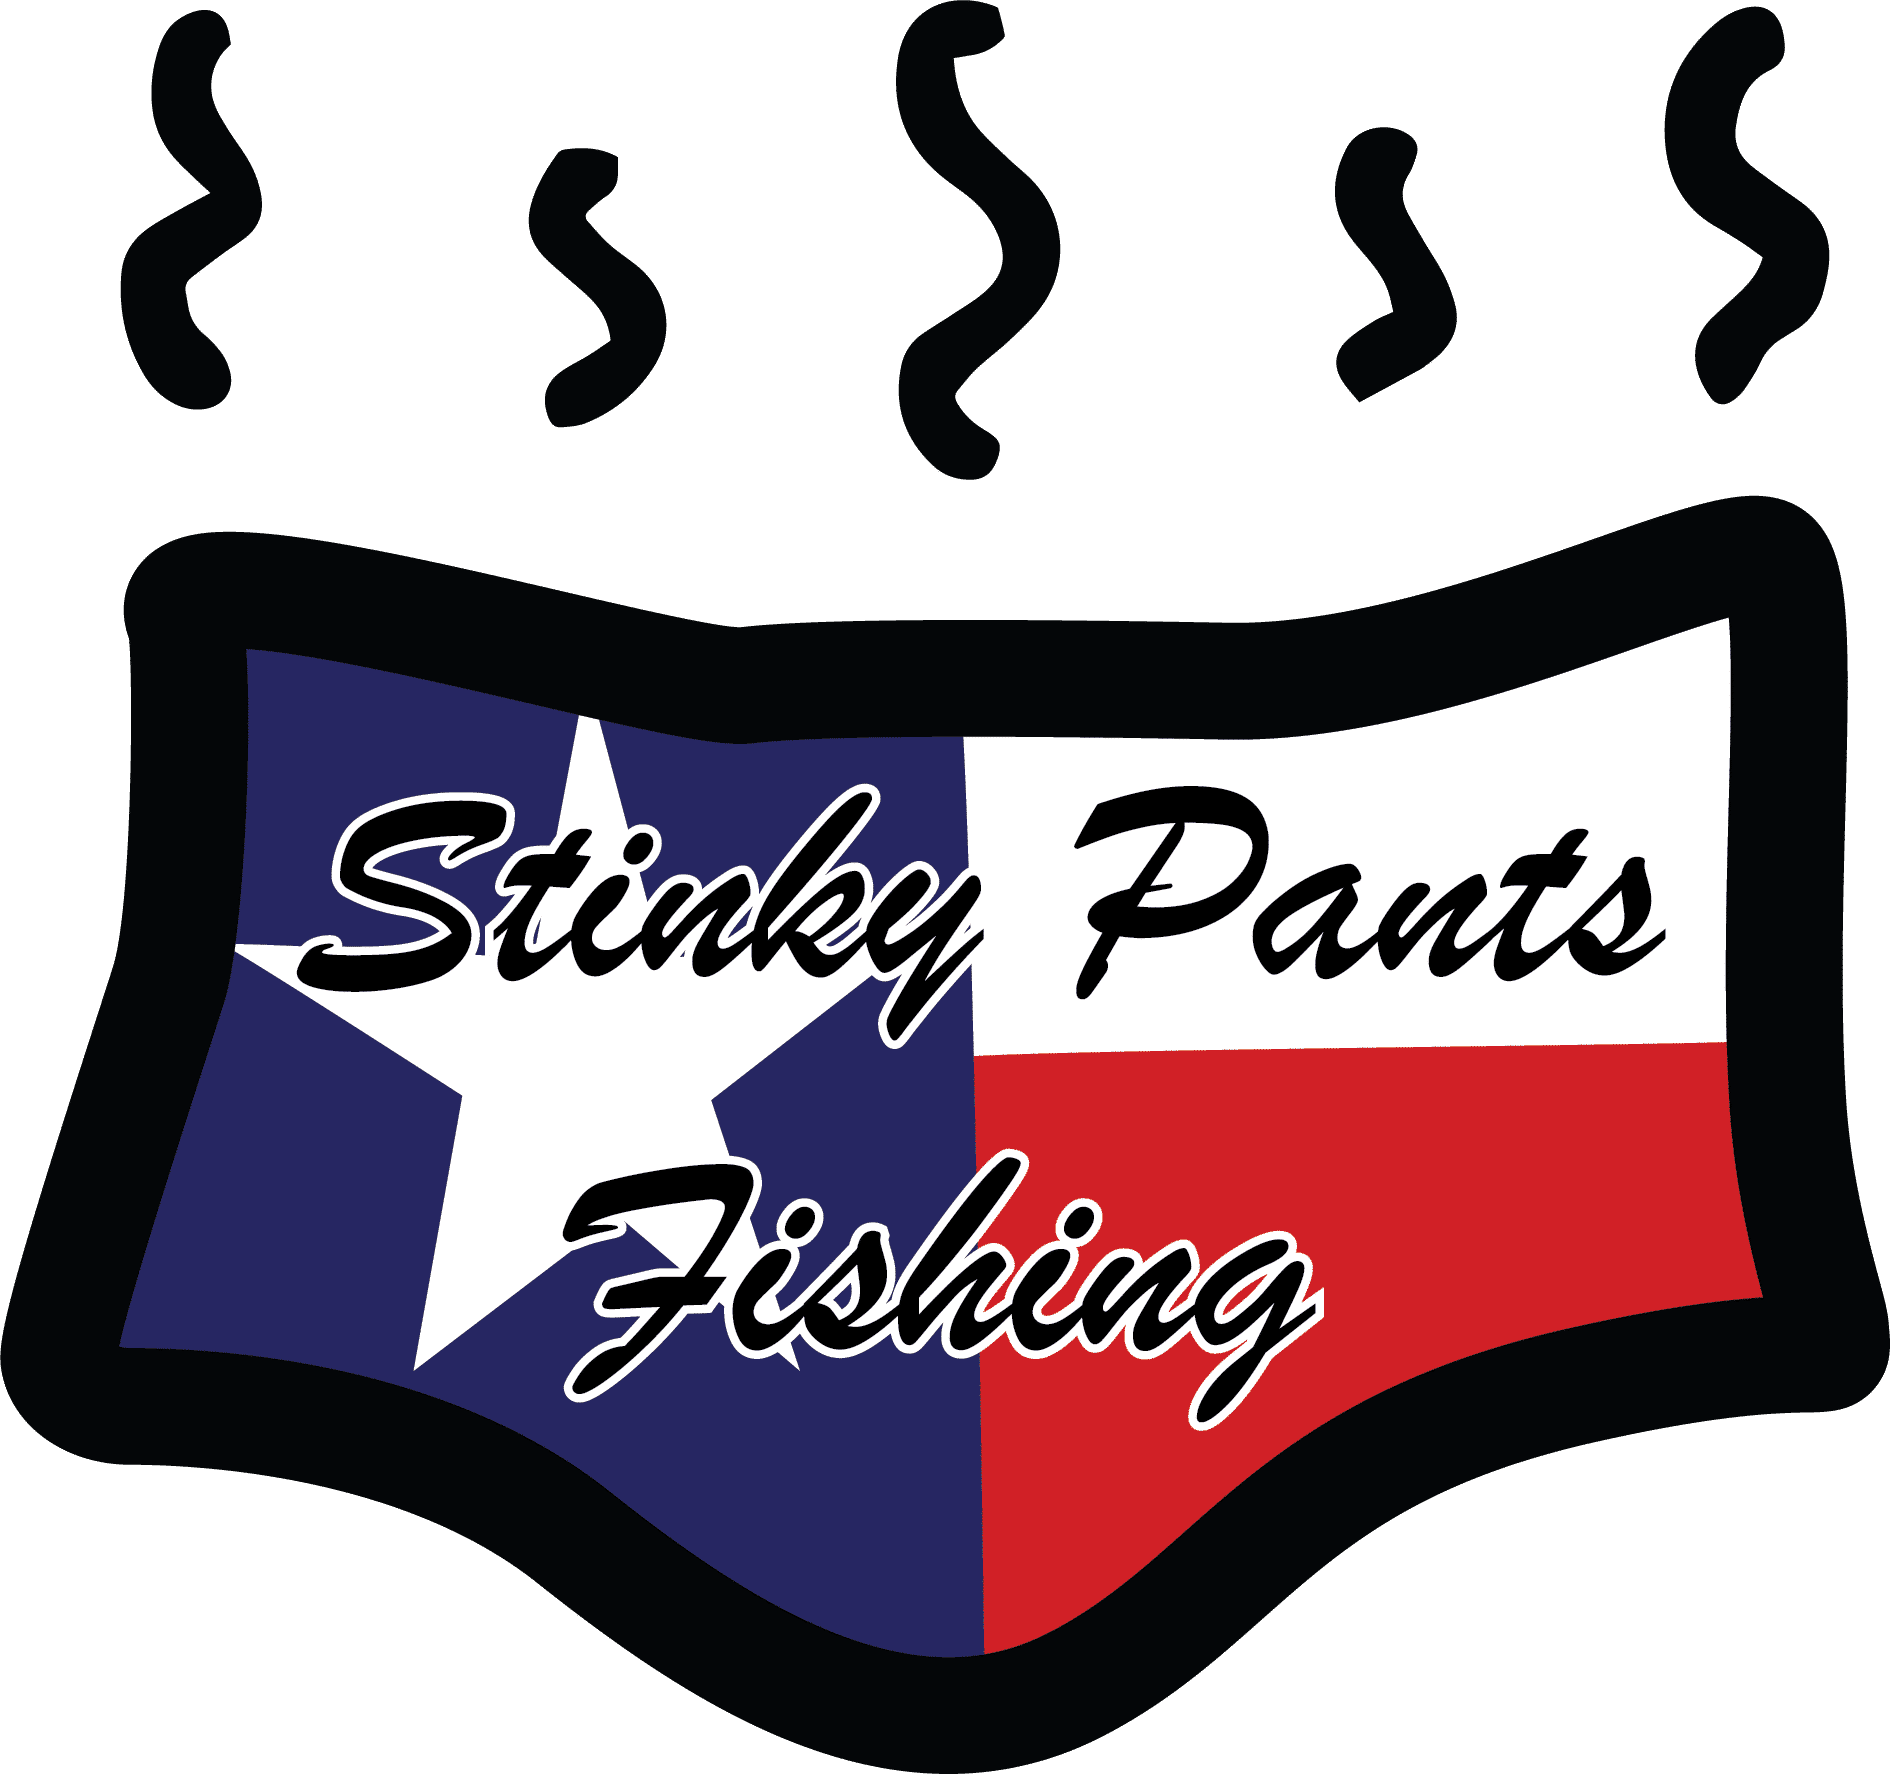 8' Pro series Stringer - Stinky Pants Fishing